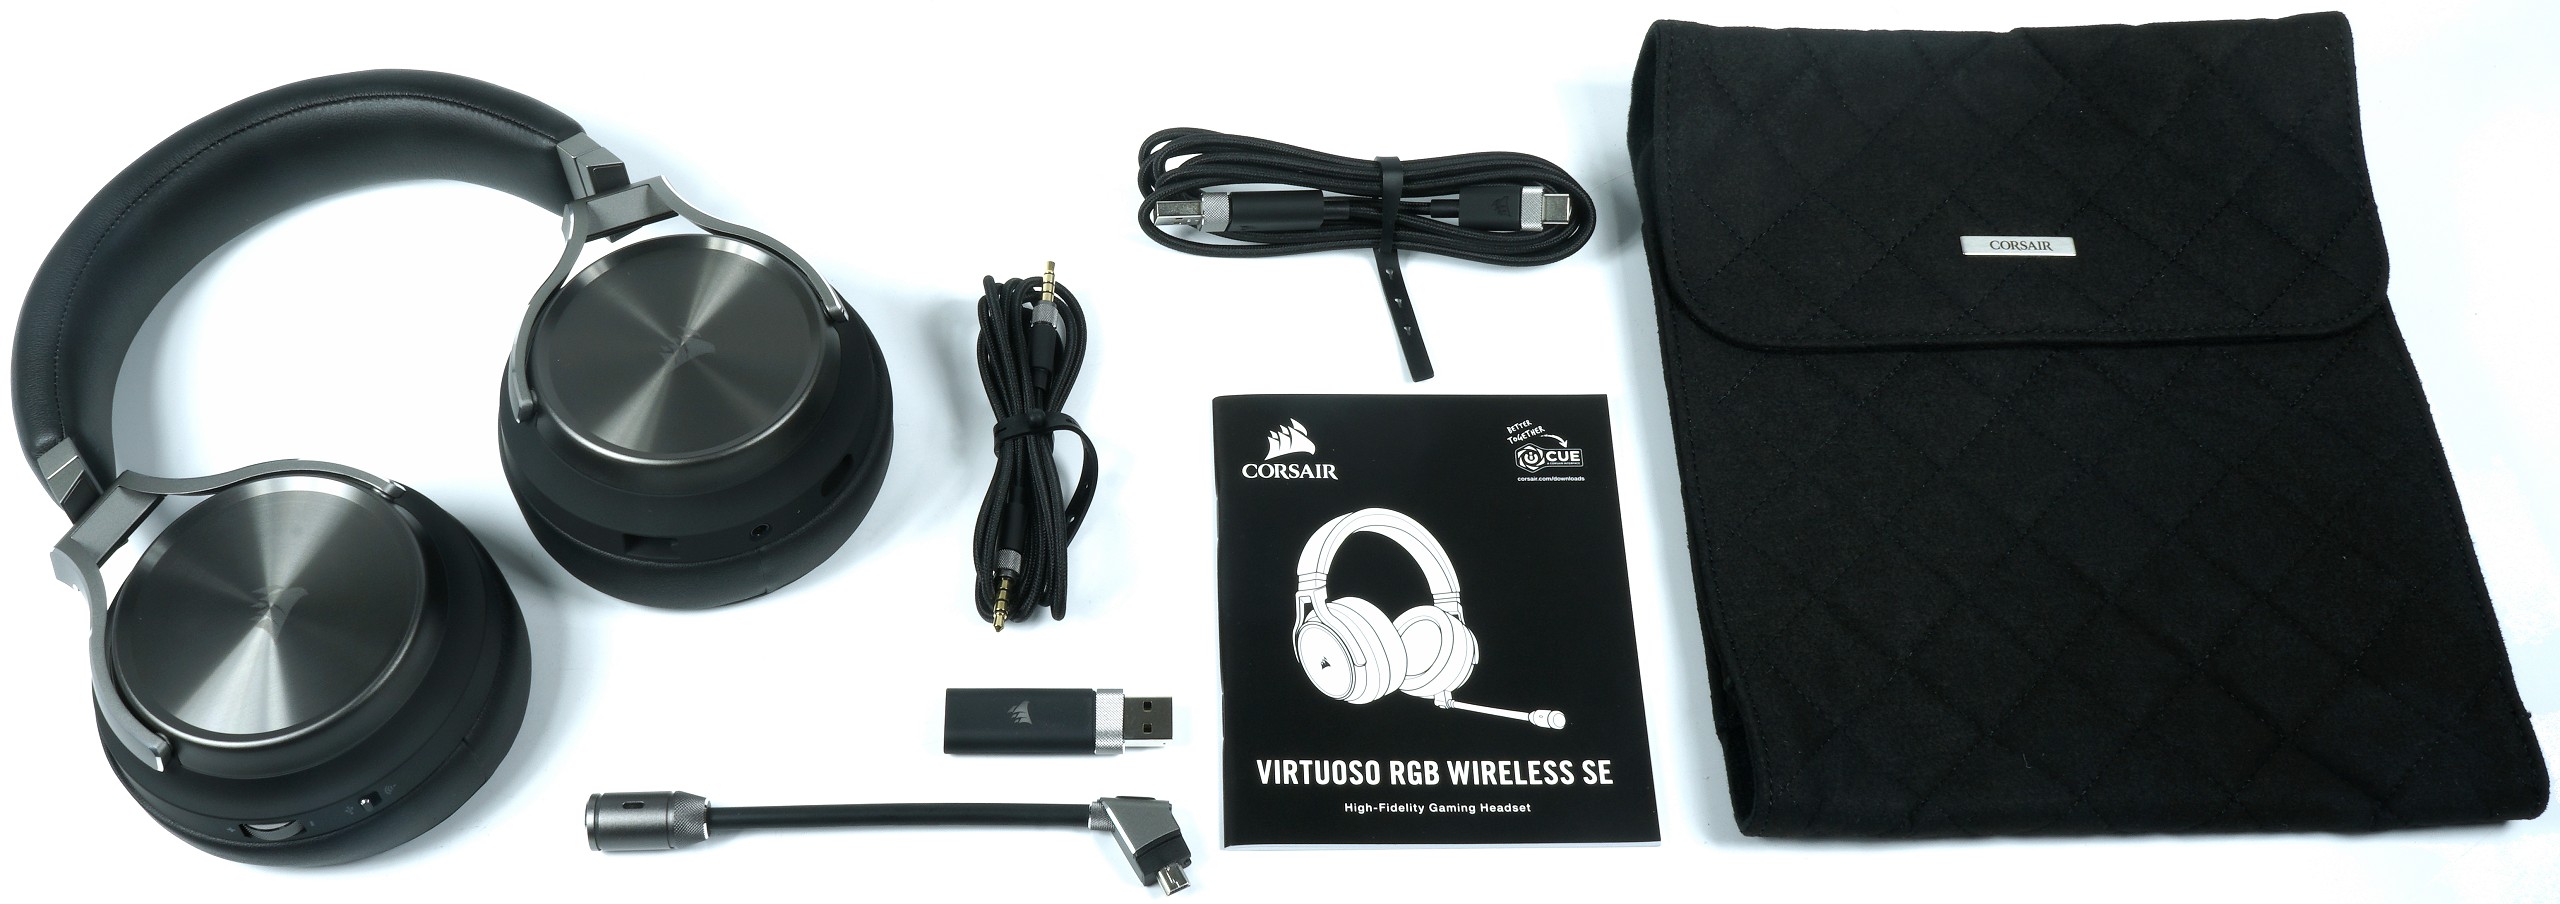 CORSAIR VIRTUOSO RGB Gaming Headset - HEADSET ONLY NO DONLGE NO